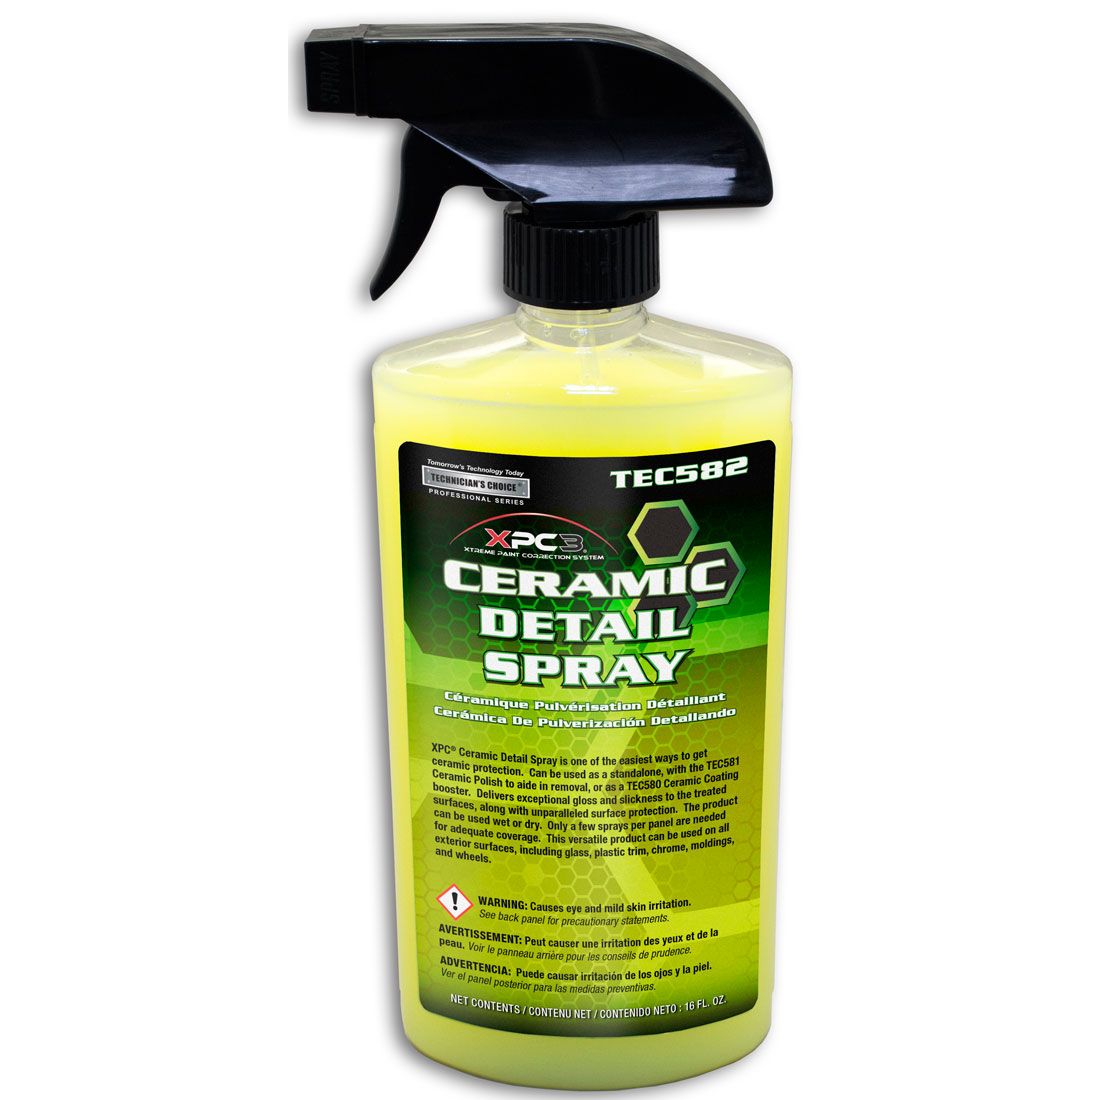 Technicians Choice TEC582 Ceramic Detail Spray (16 OZ) : :  Automotive